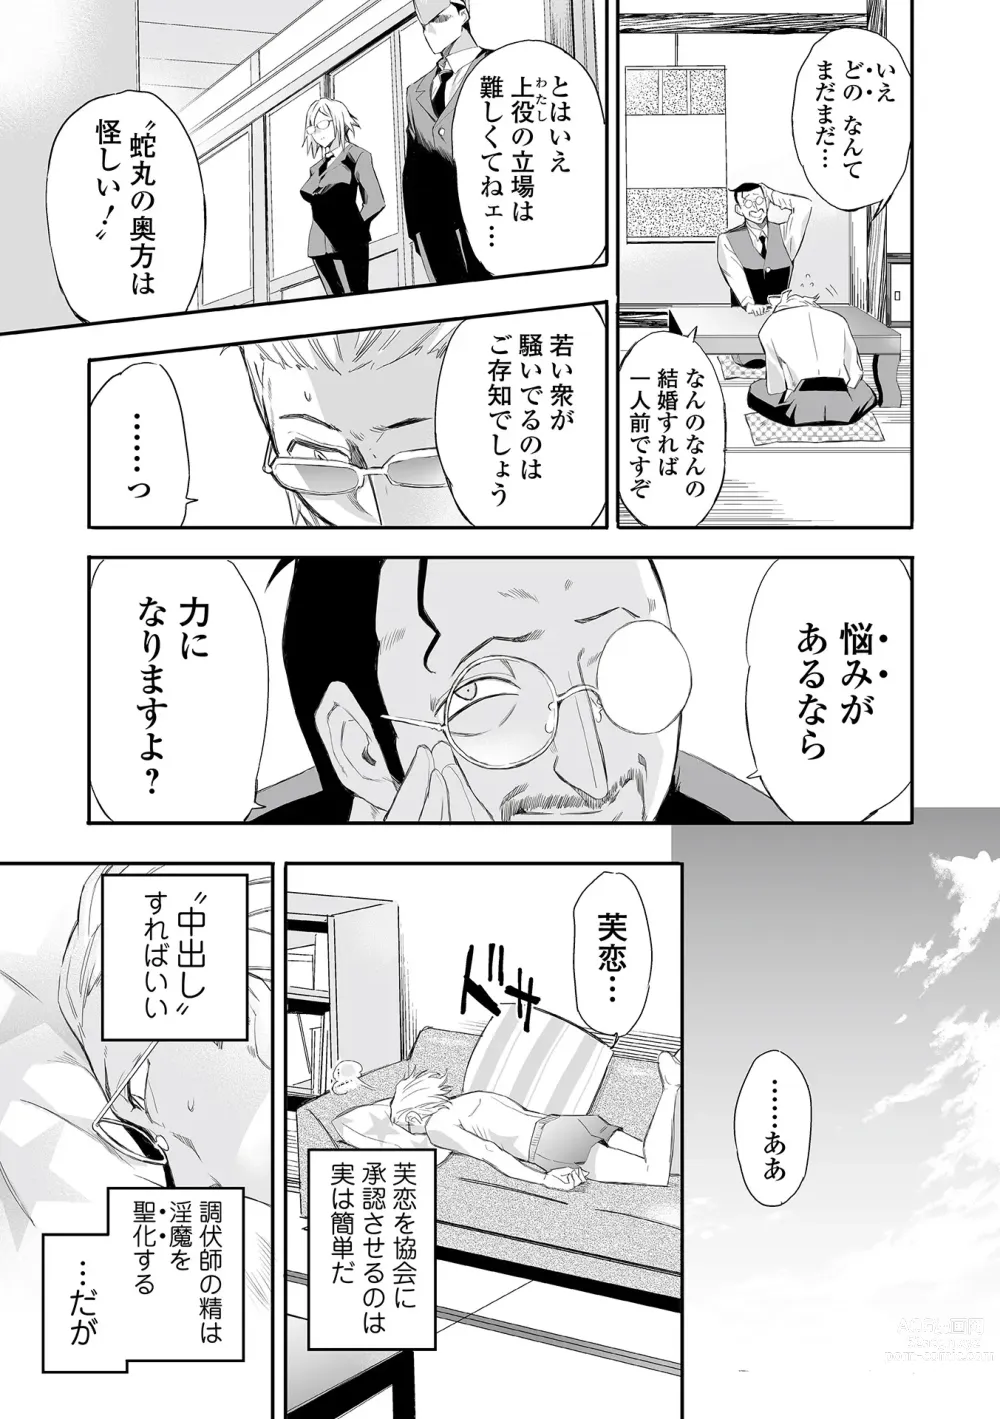 Page 85 of manga Web Comic Toutetsu Vol. 82